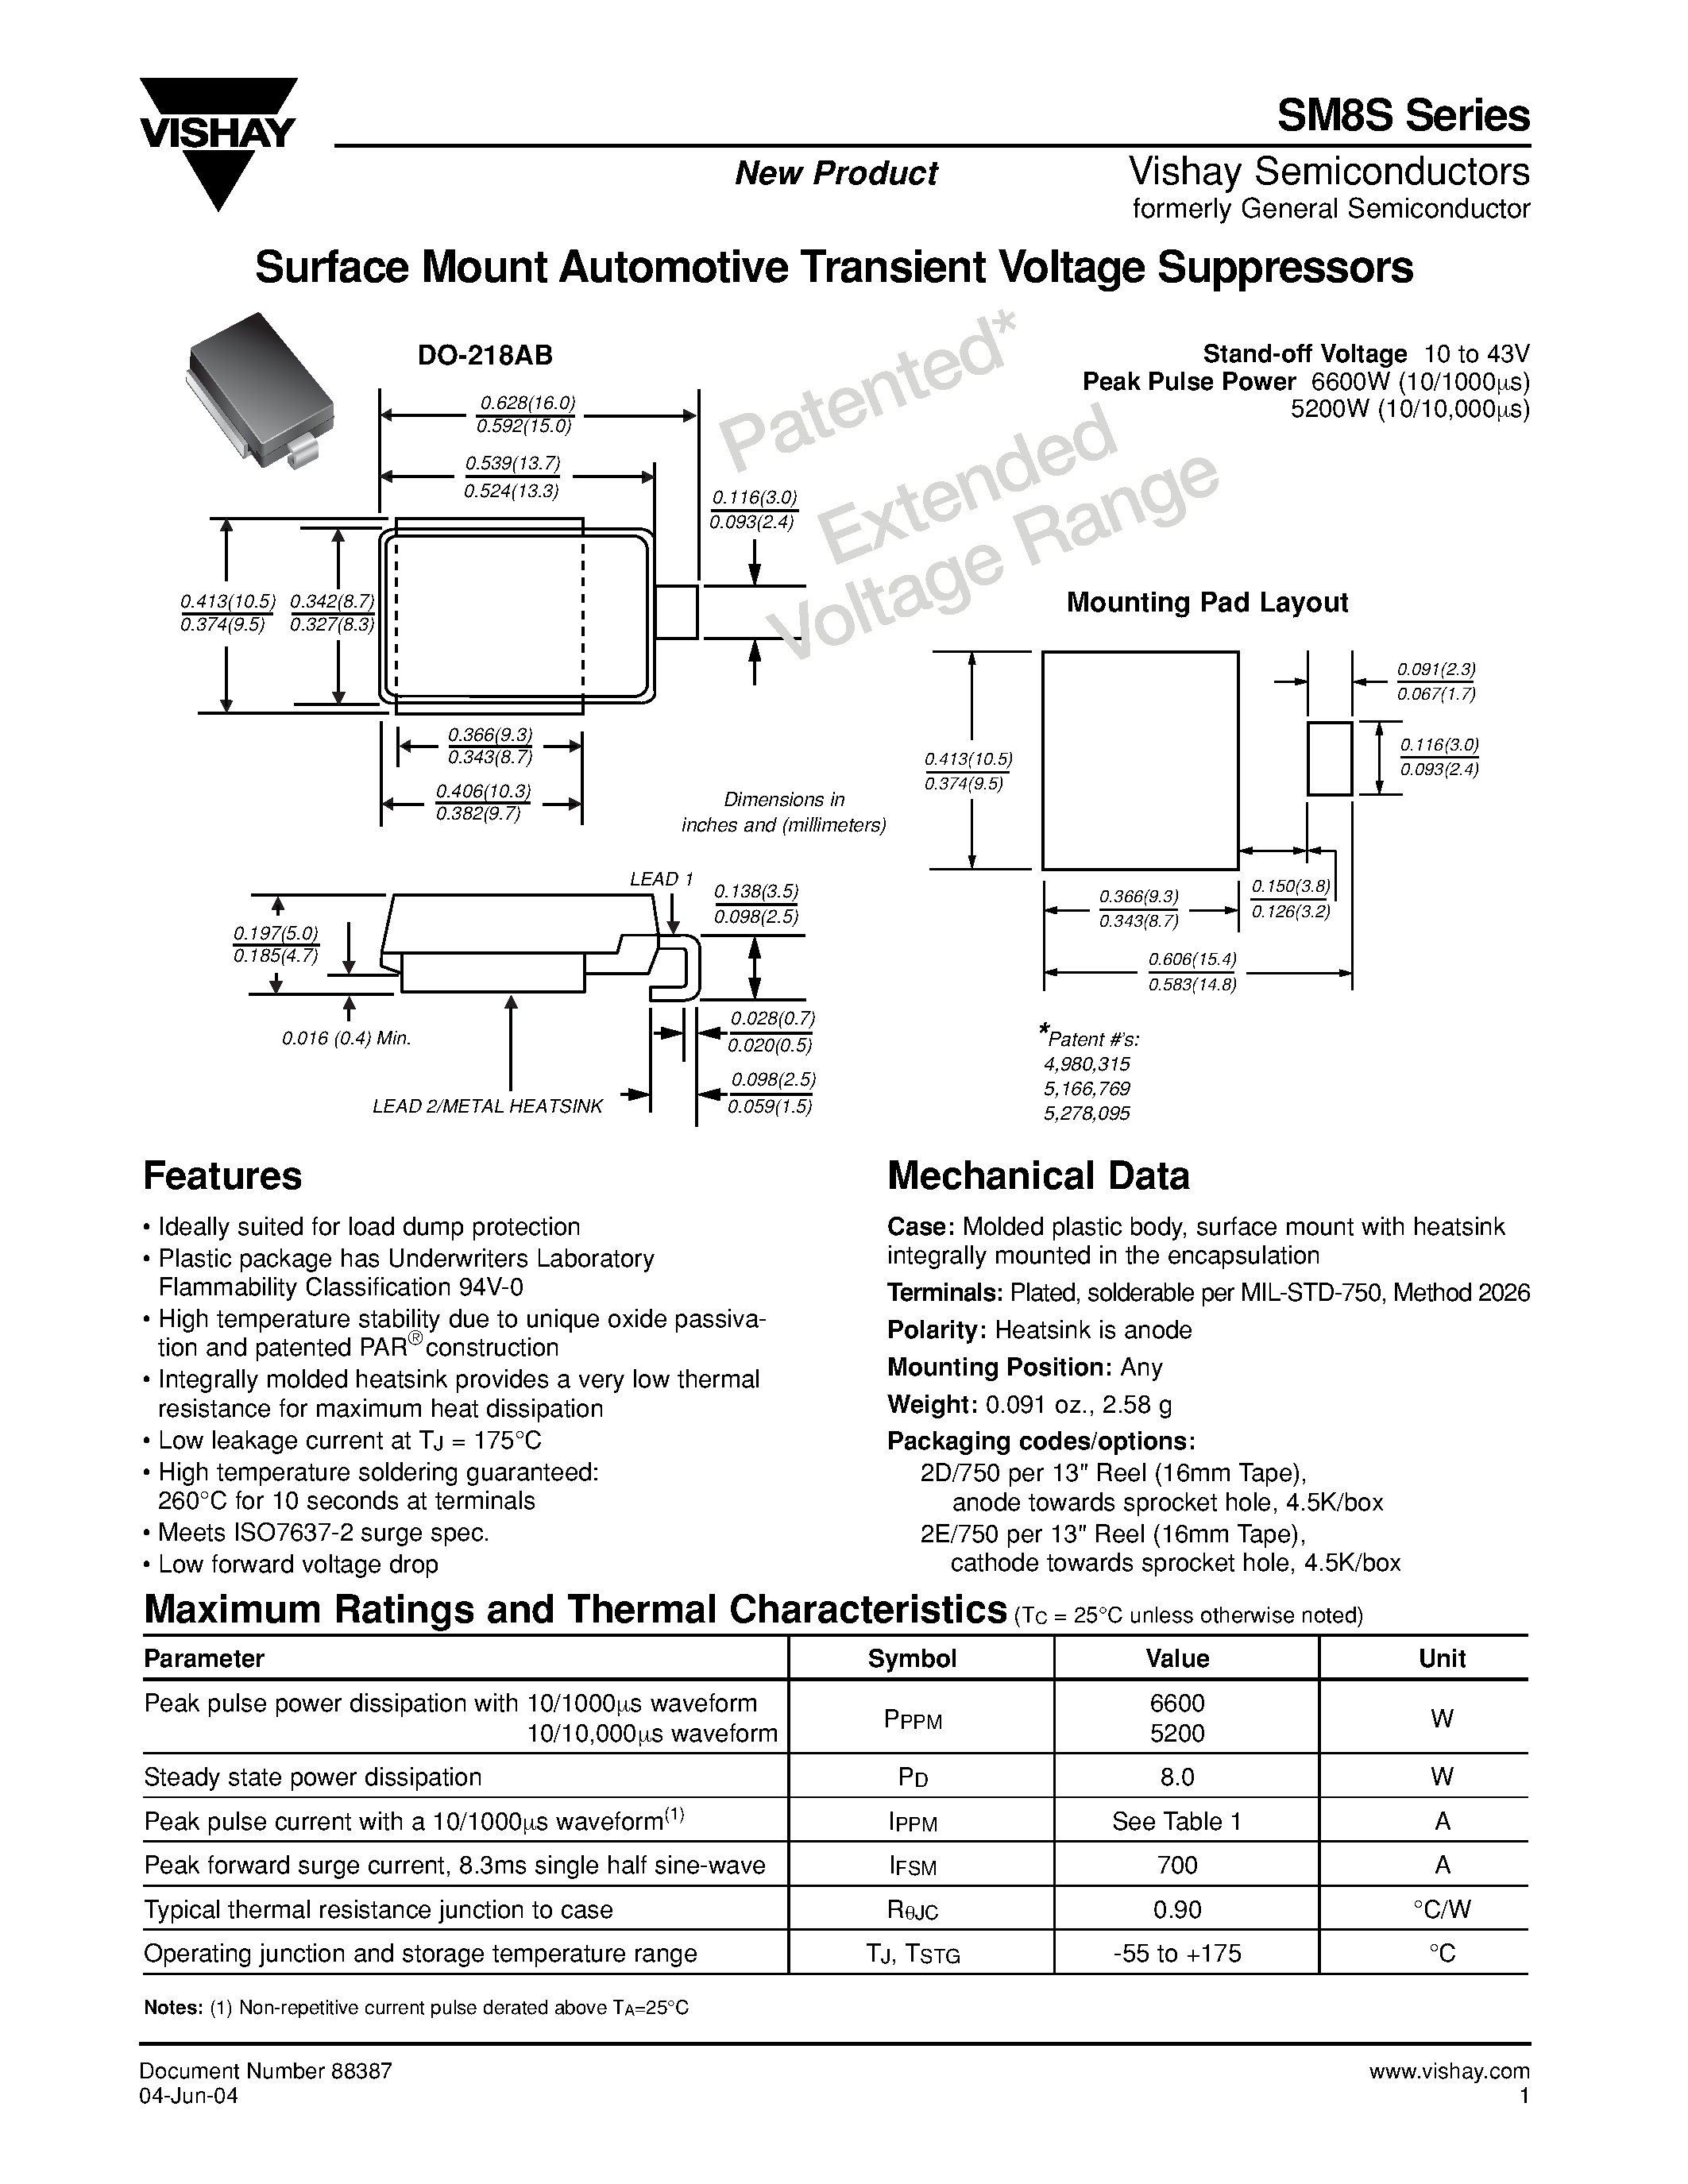 Даташит SM8S20A - Surface Mount Automotive Transient Voltage Suppressors страница 1